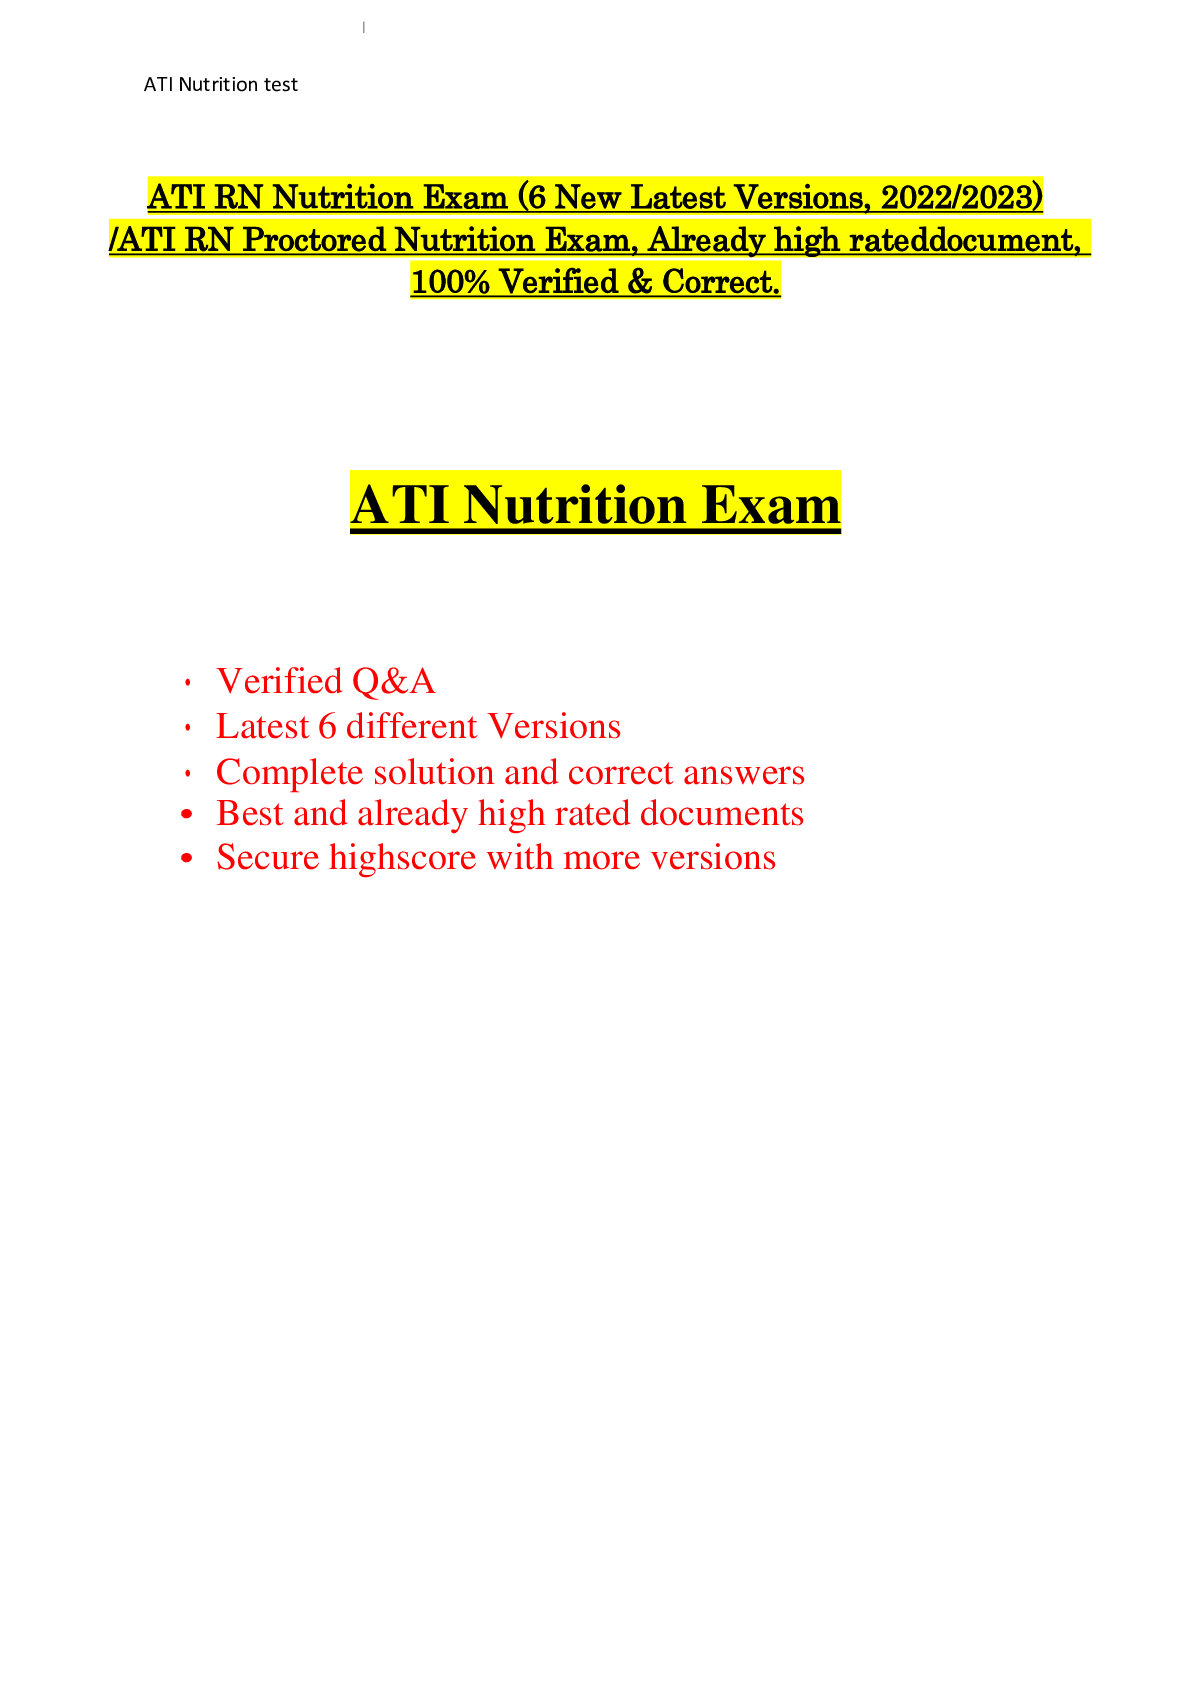 ATI RN Nutrition Exam (6 New Latest Versions, 2022/2023) /ATI RN